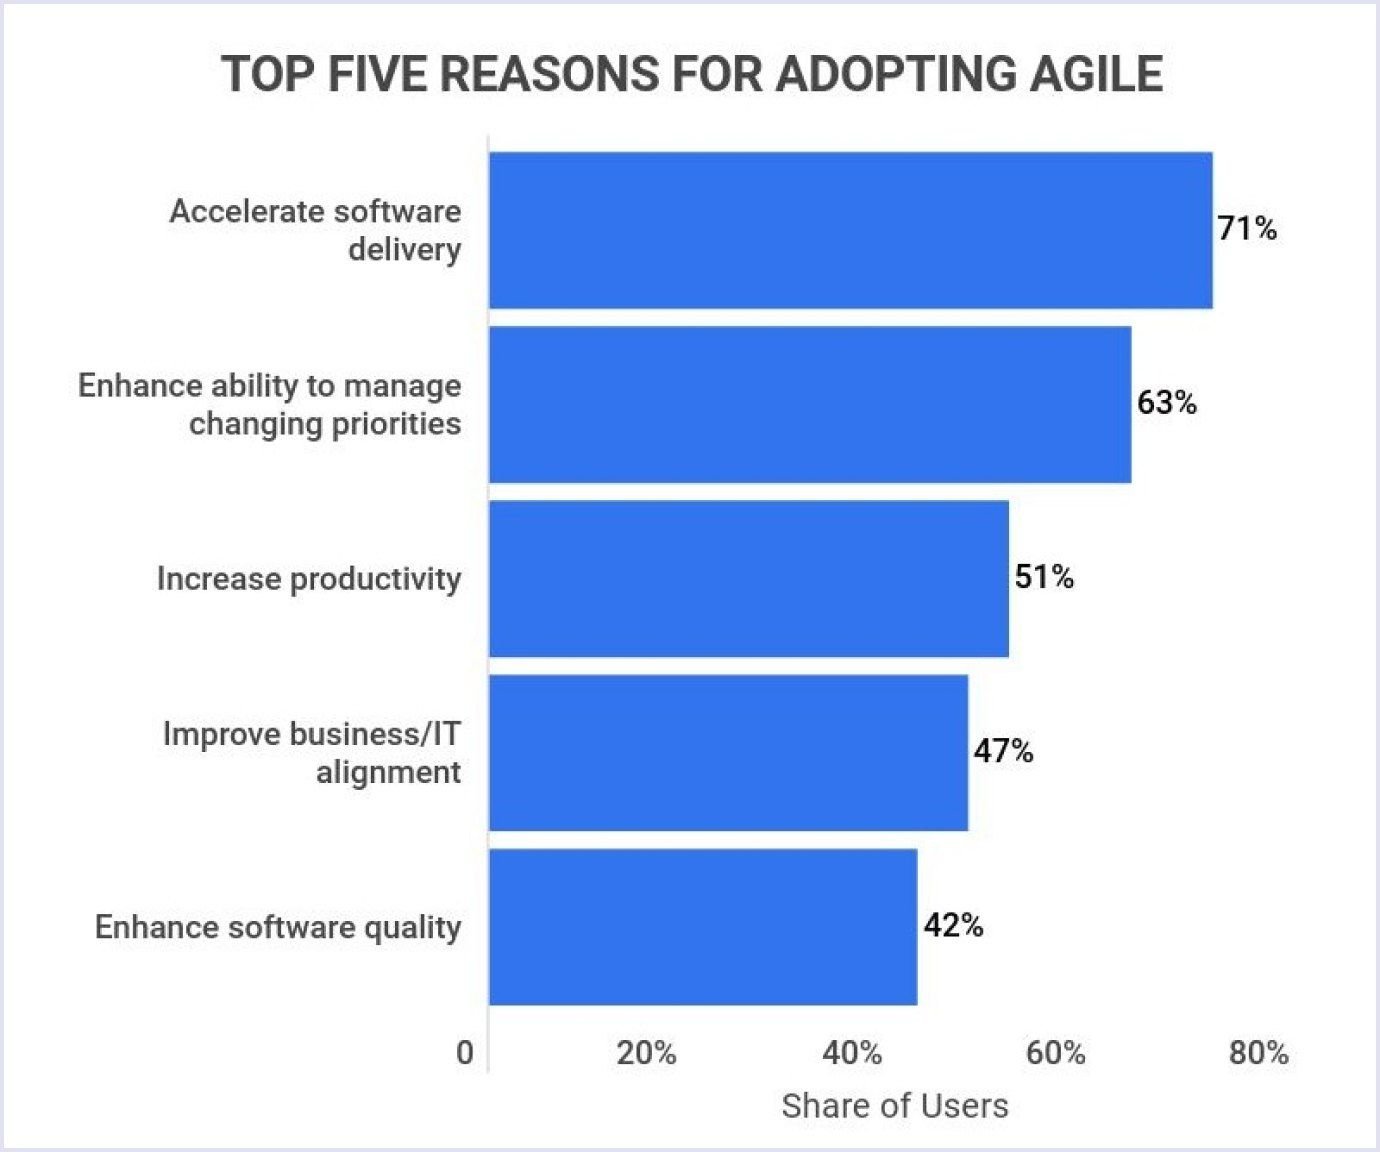 The benefits of Agile adoption